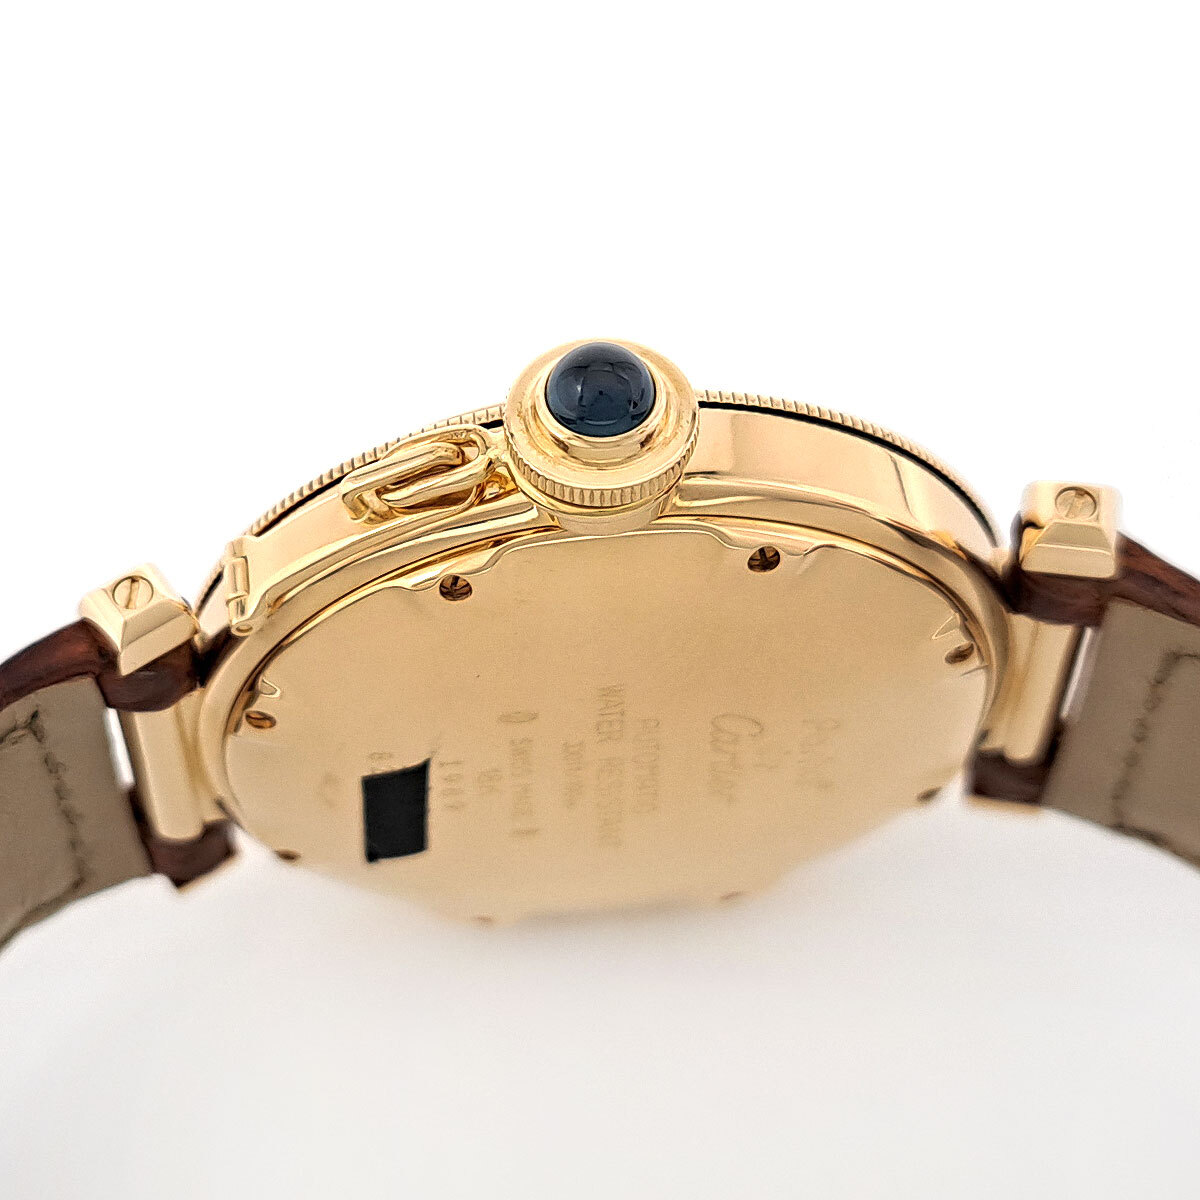  Cartier Pacha 38 81750353 self-winding watch yellow gold men's CARTIER used [ clock ]